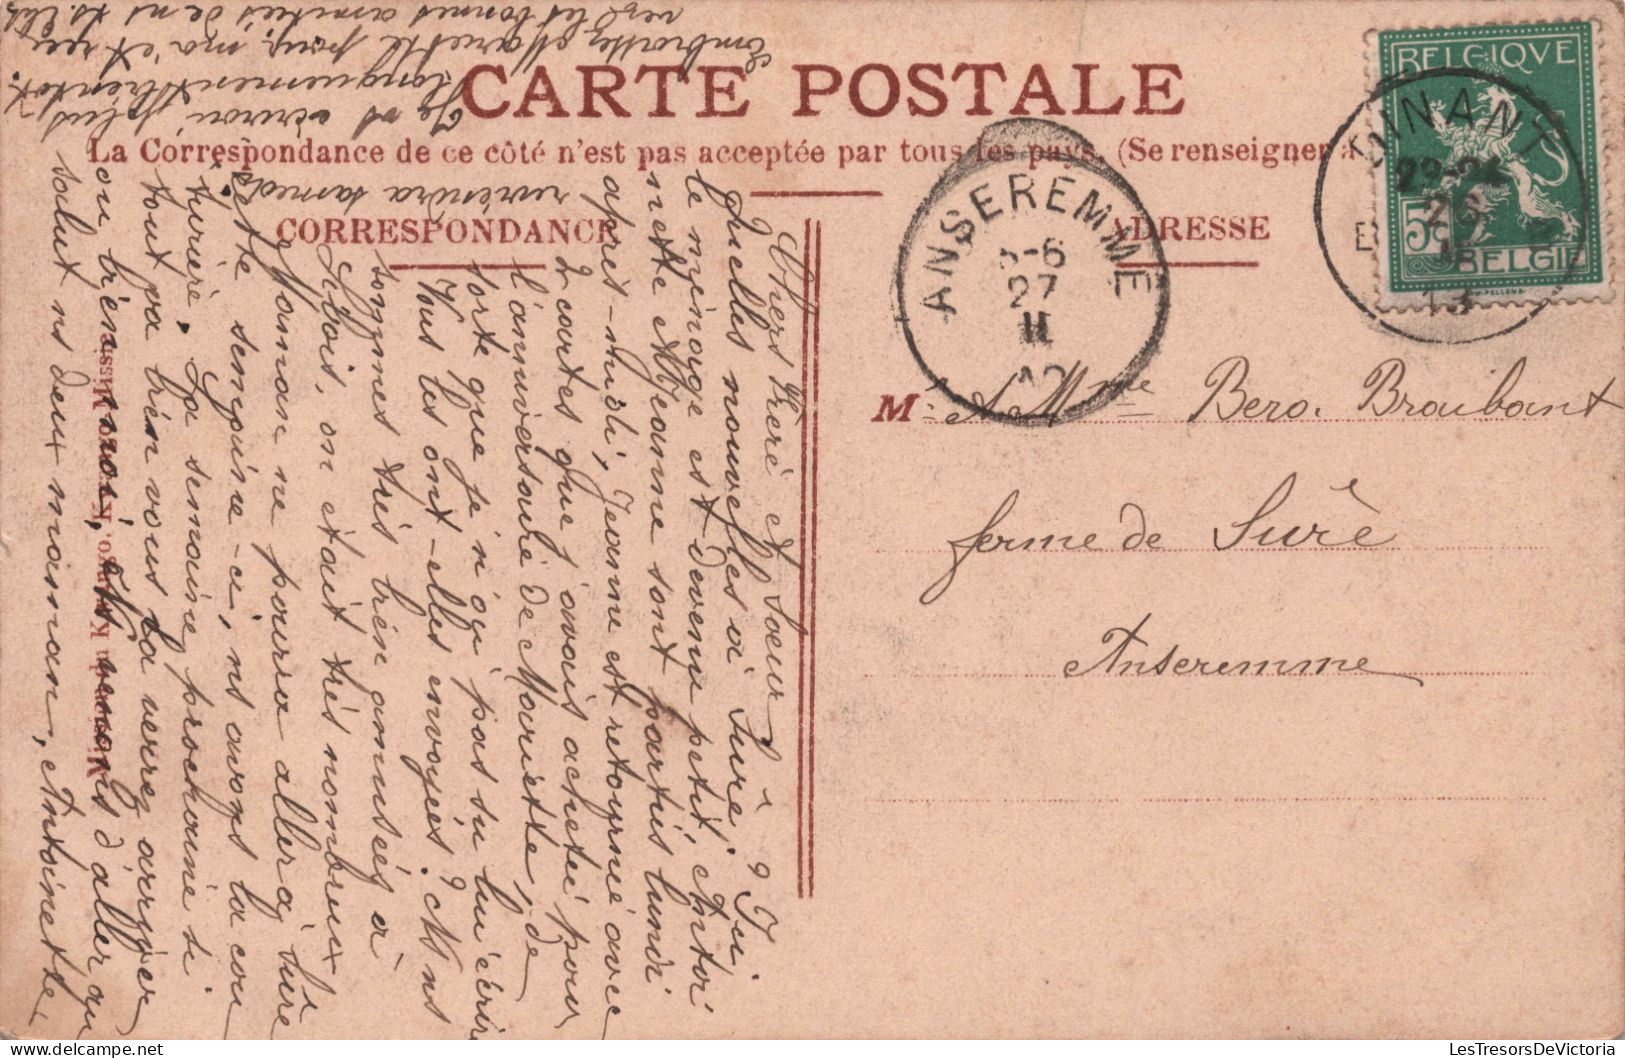 Kisantu - Jeunes Mariés - Jonge Getrouwden   - Carte Postale Ancienne - Other & Unclassified